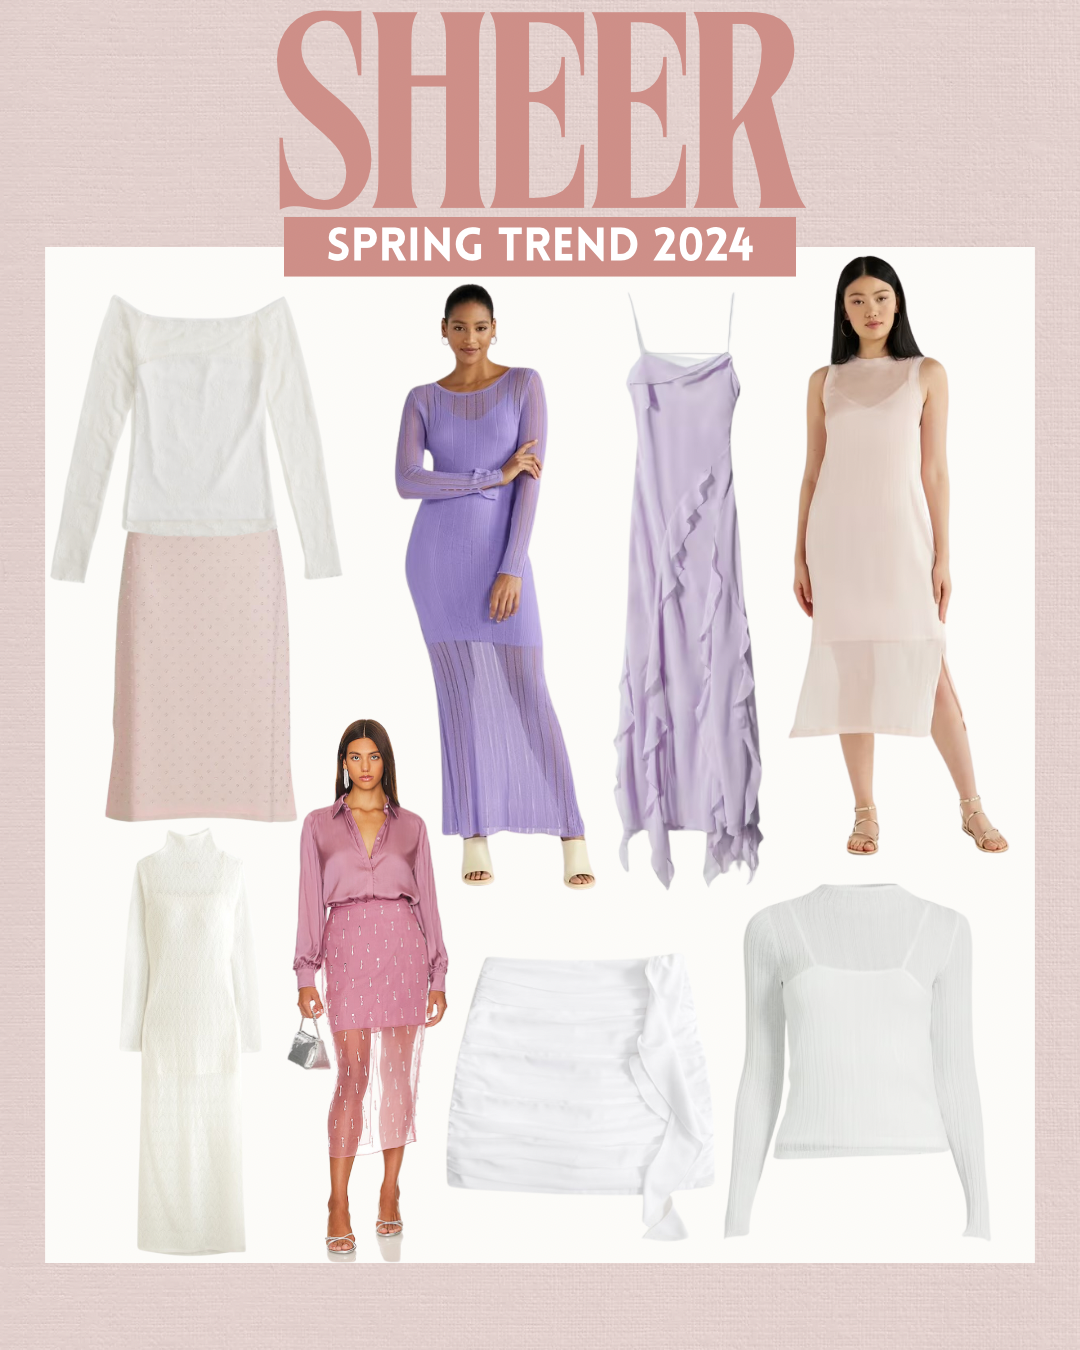 Spring Trend 2024 - Sheer